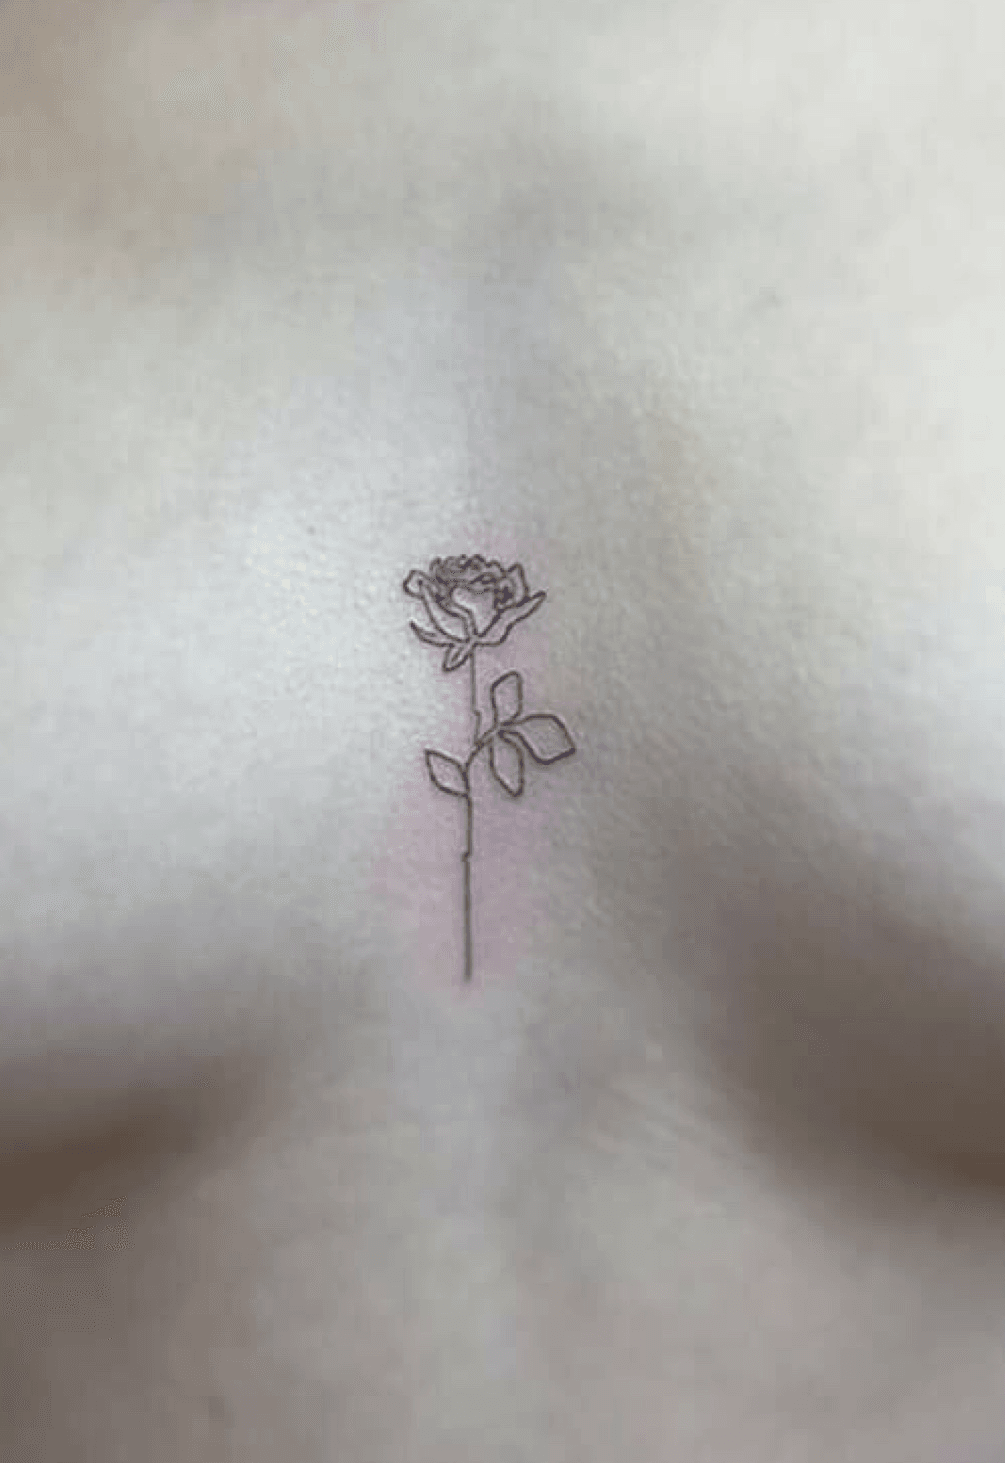 Single Line Rose Tattoo on Ankle